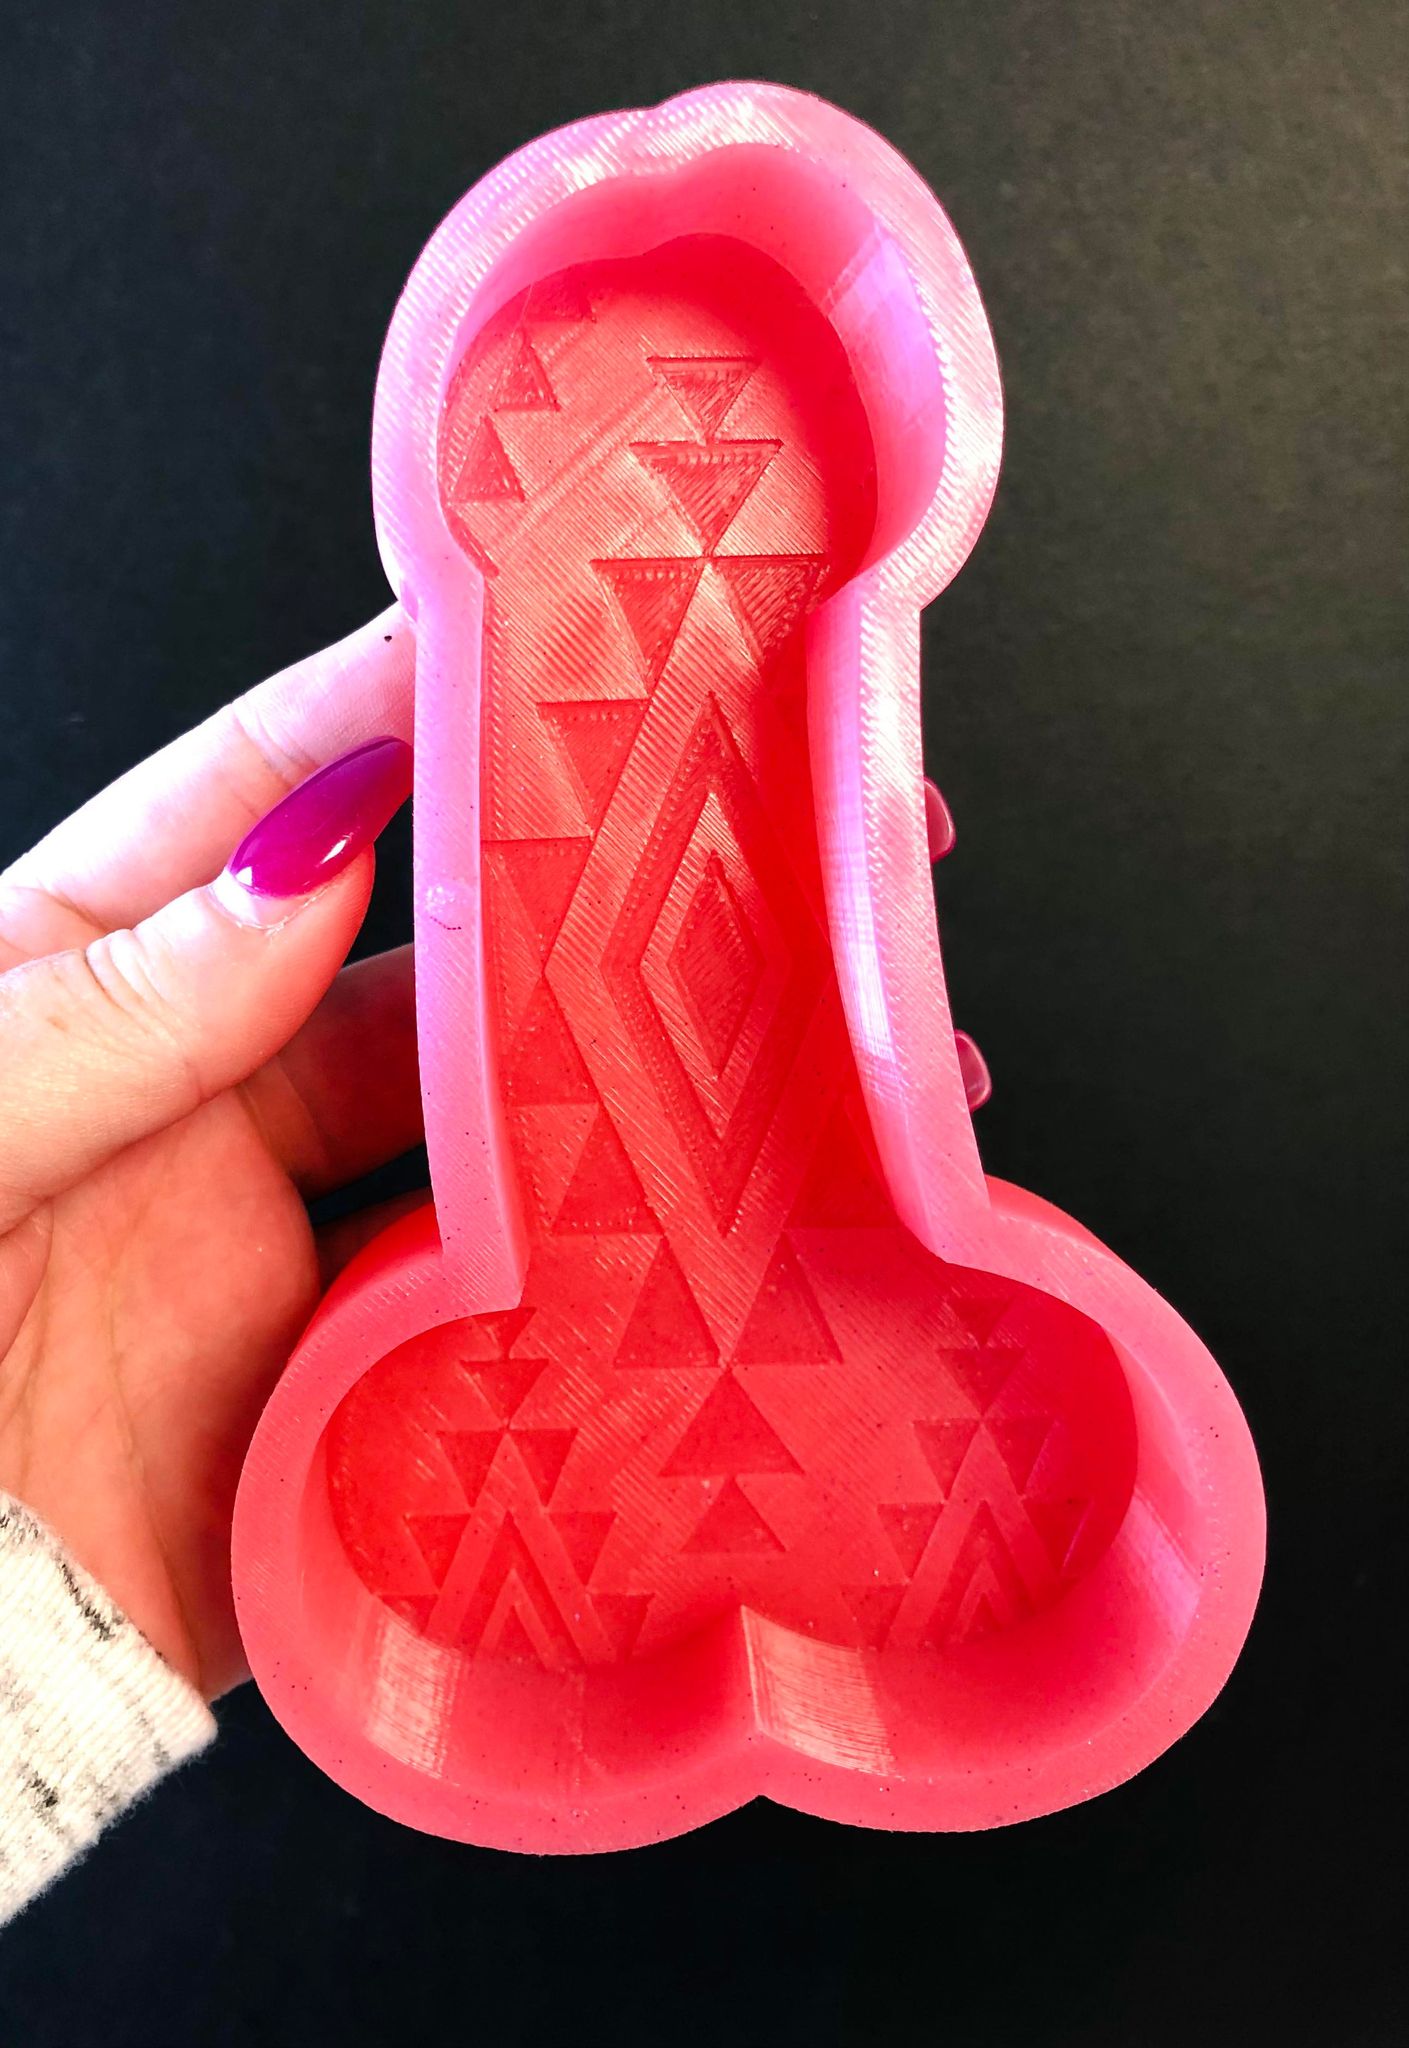 new design silicone penis mold /